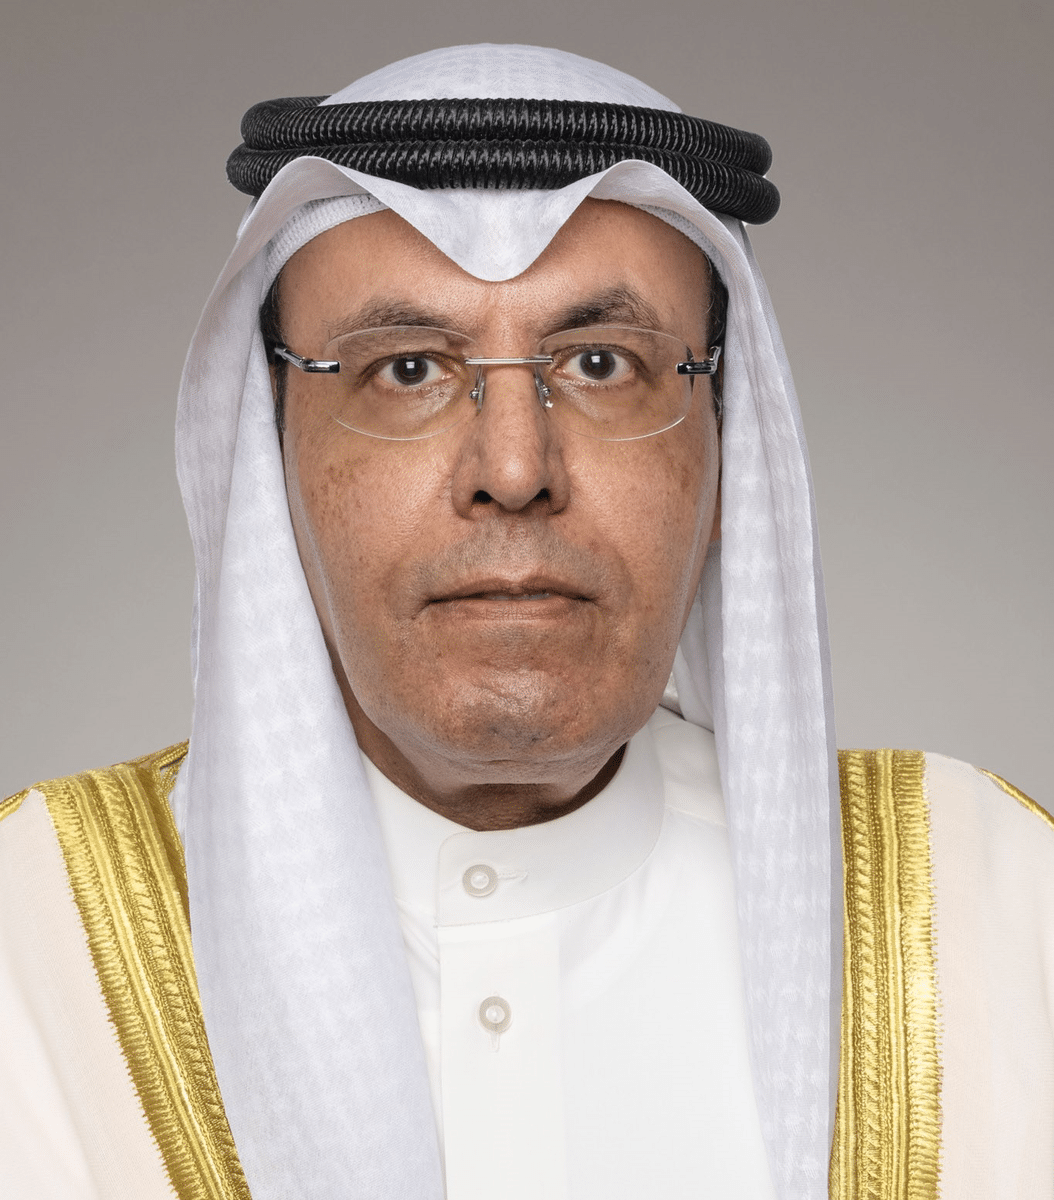 Dr Hamad Al-Adwani Education